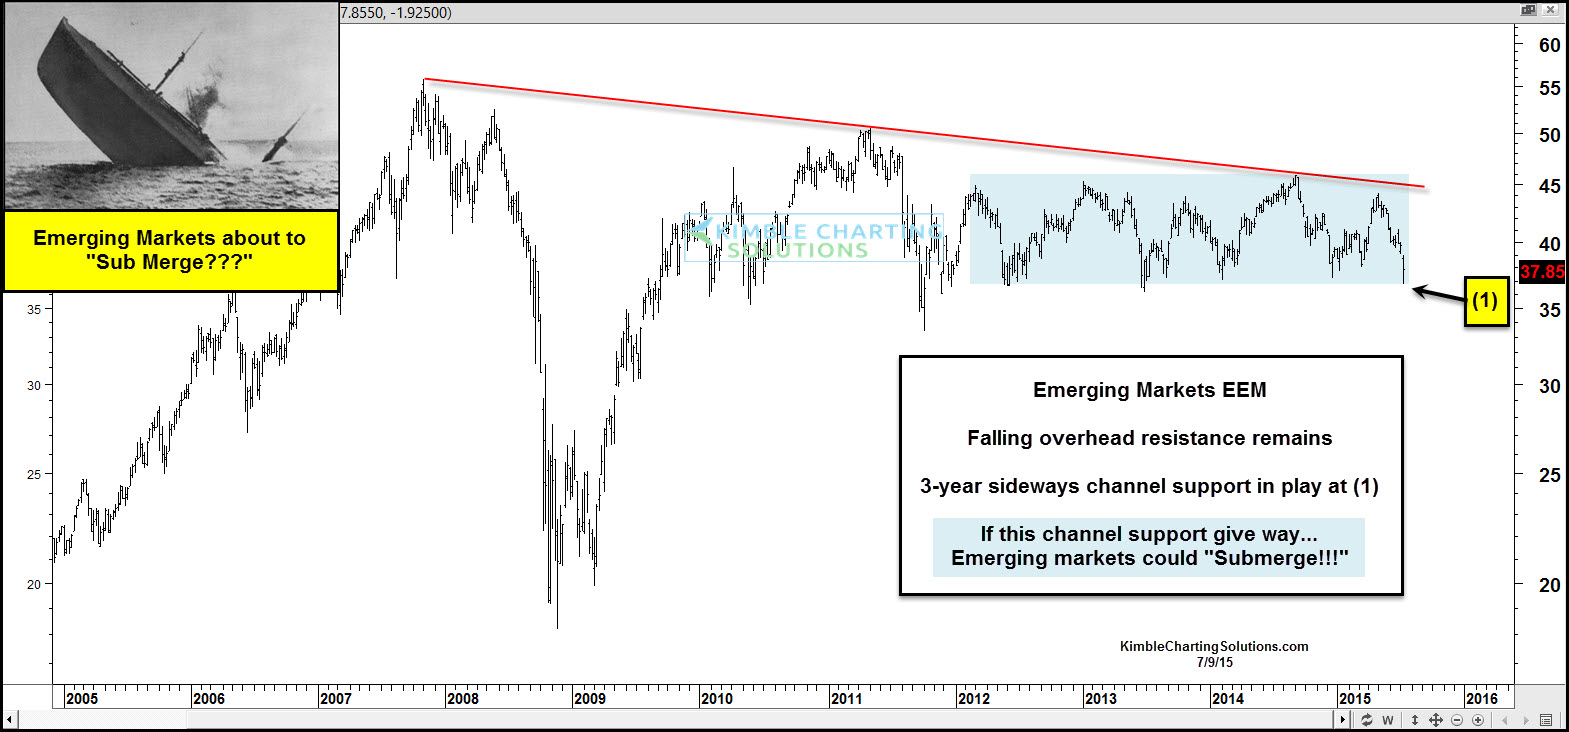 iShares Emerging Markets